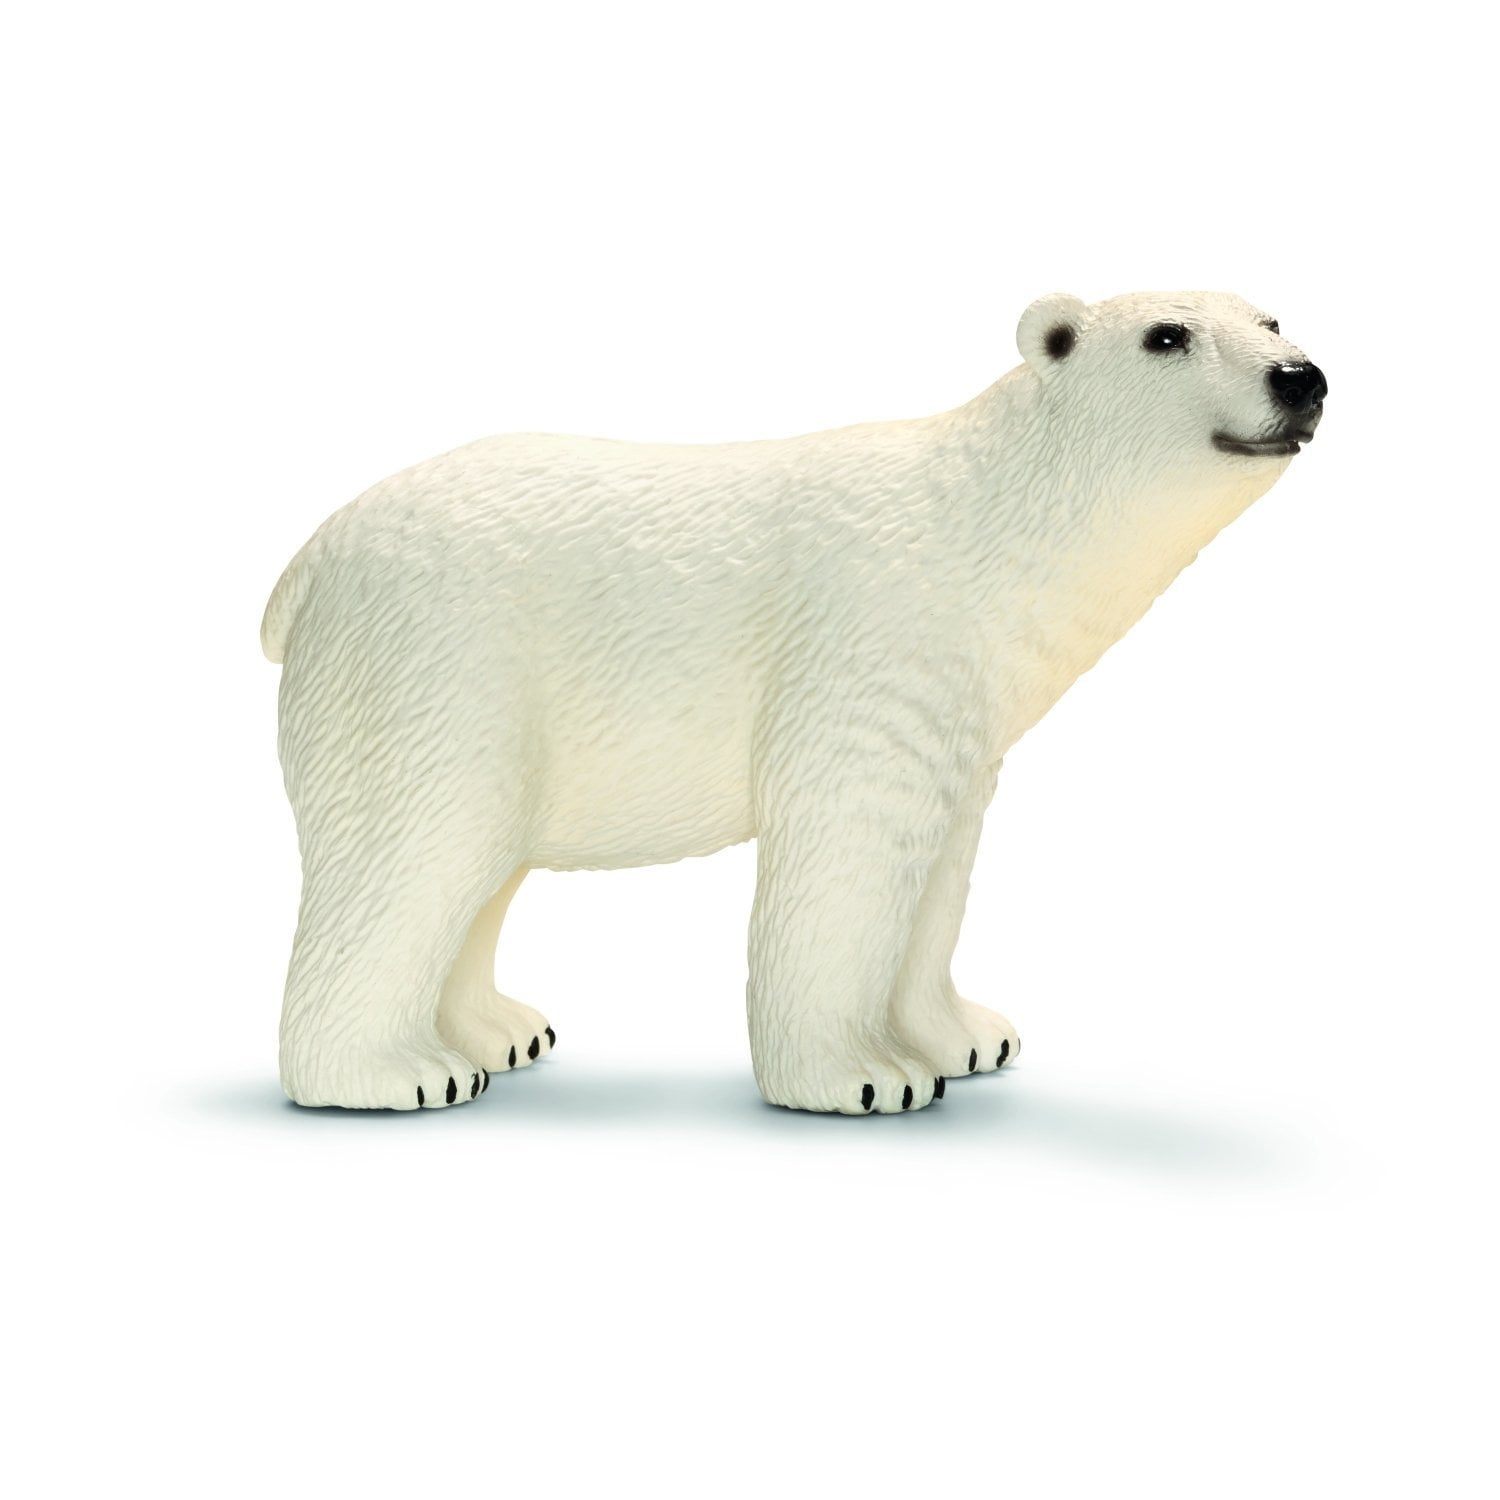 Polar Bear Animal Model Toy Figurine Made in Germany Schleich 